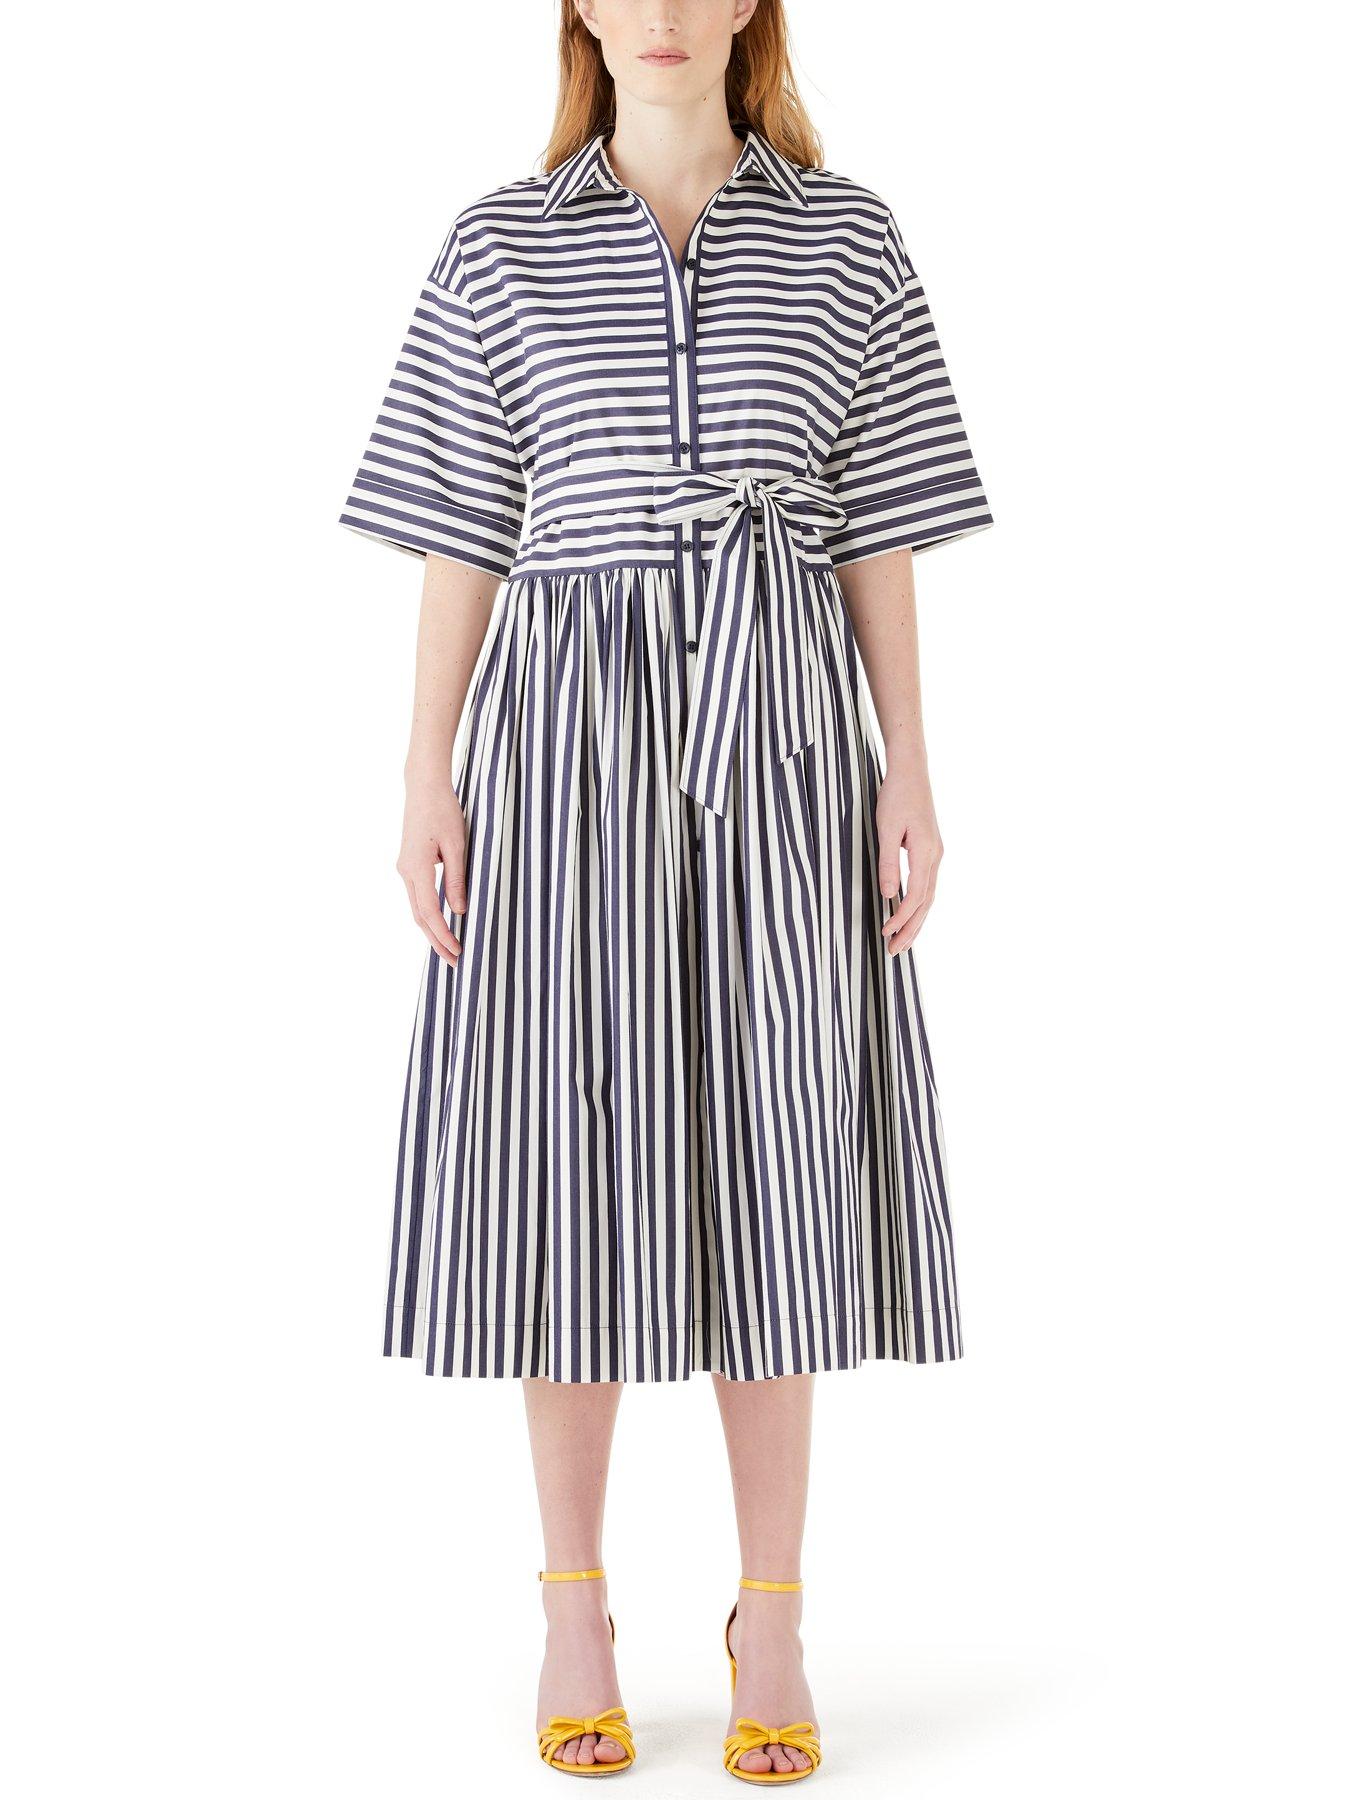 Kate Spade New York Julia Stripe Midi Shirt Dress - Blue/White 